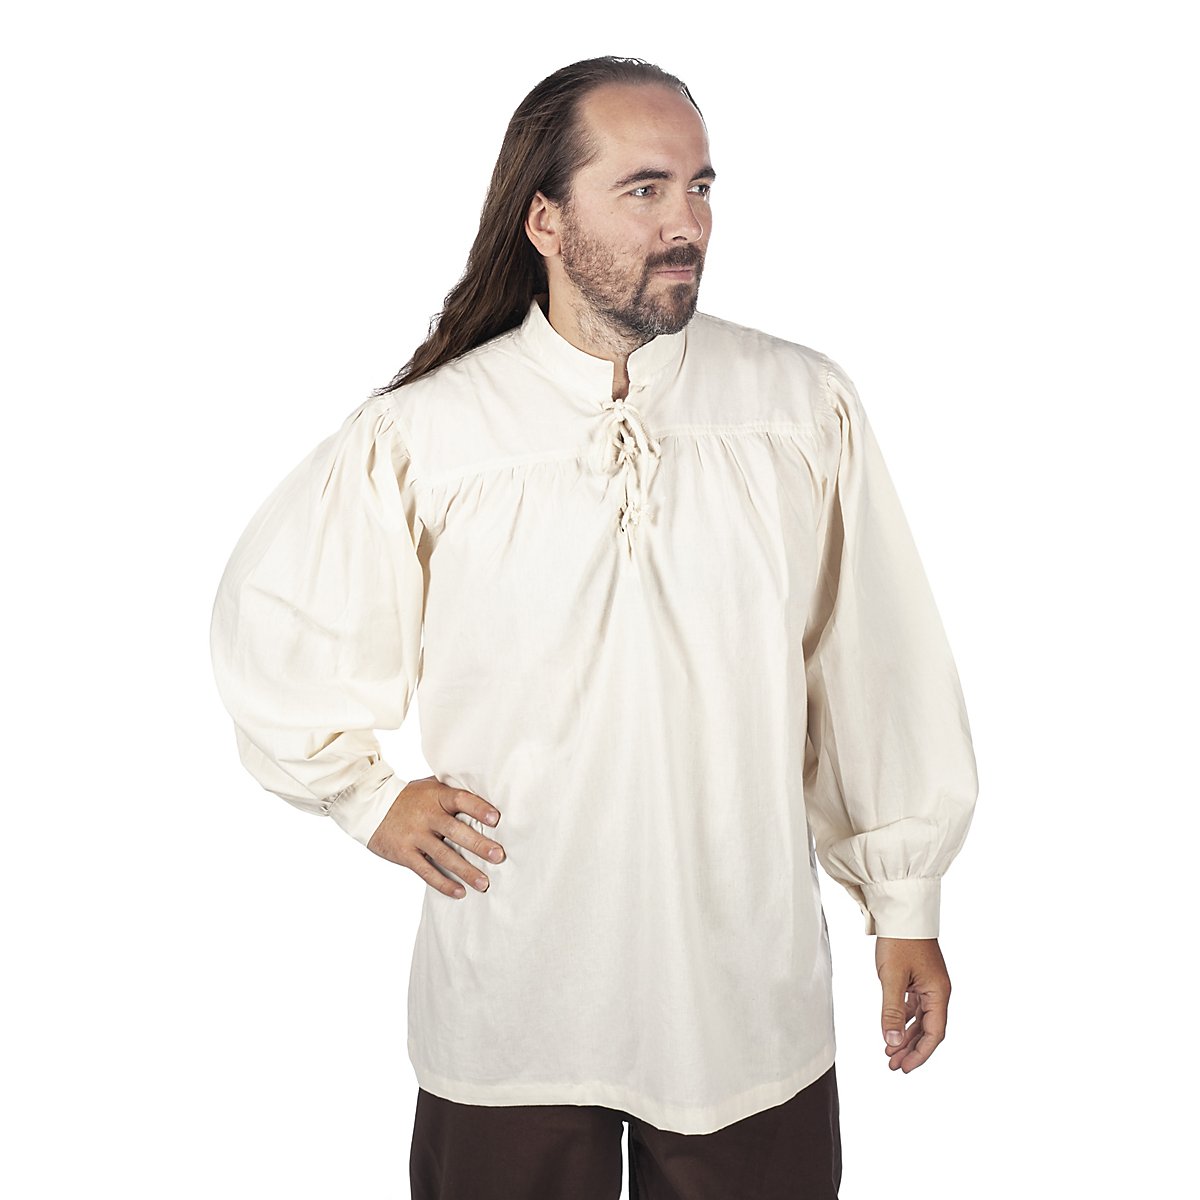 Medieval Laced Shirt - Hagen - andracor.com